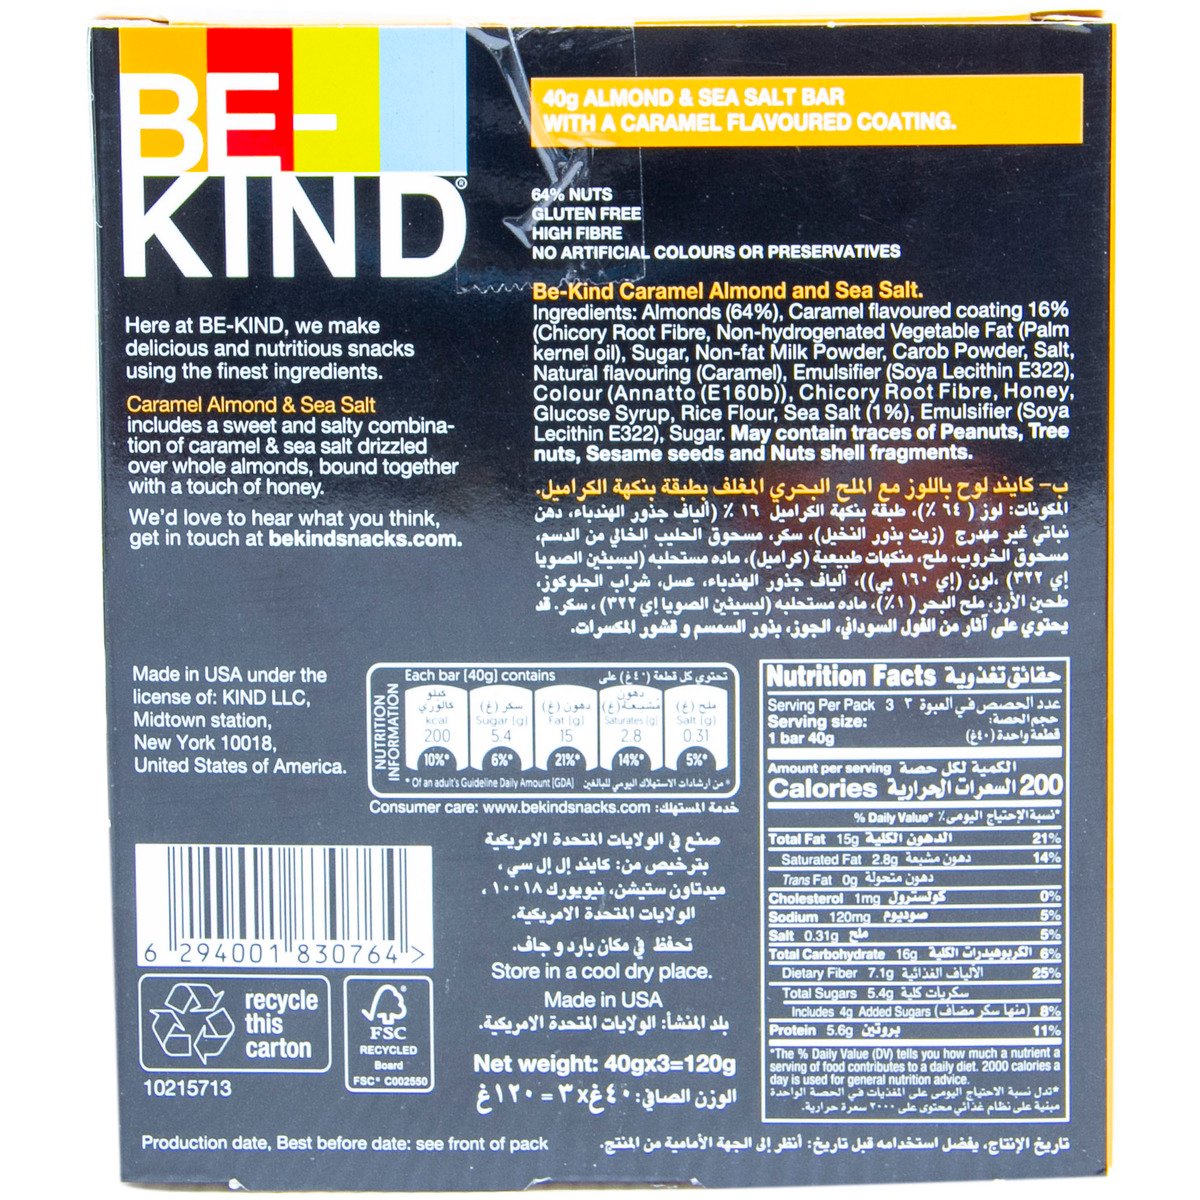 Be Kind Caramel Almond & Sea Salt Bar 3 x 40g